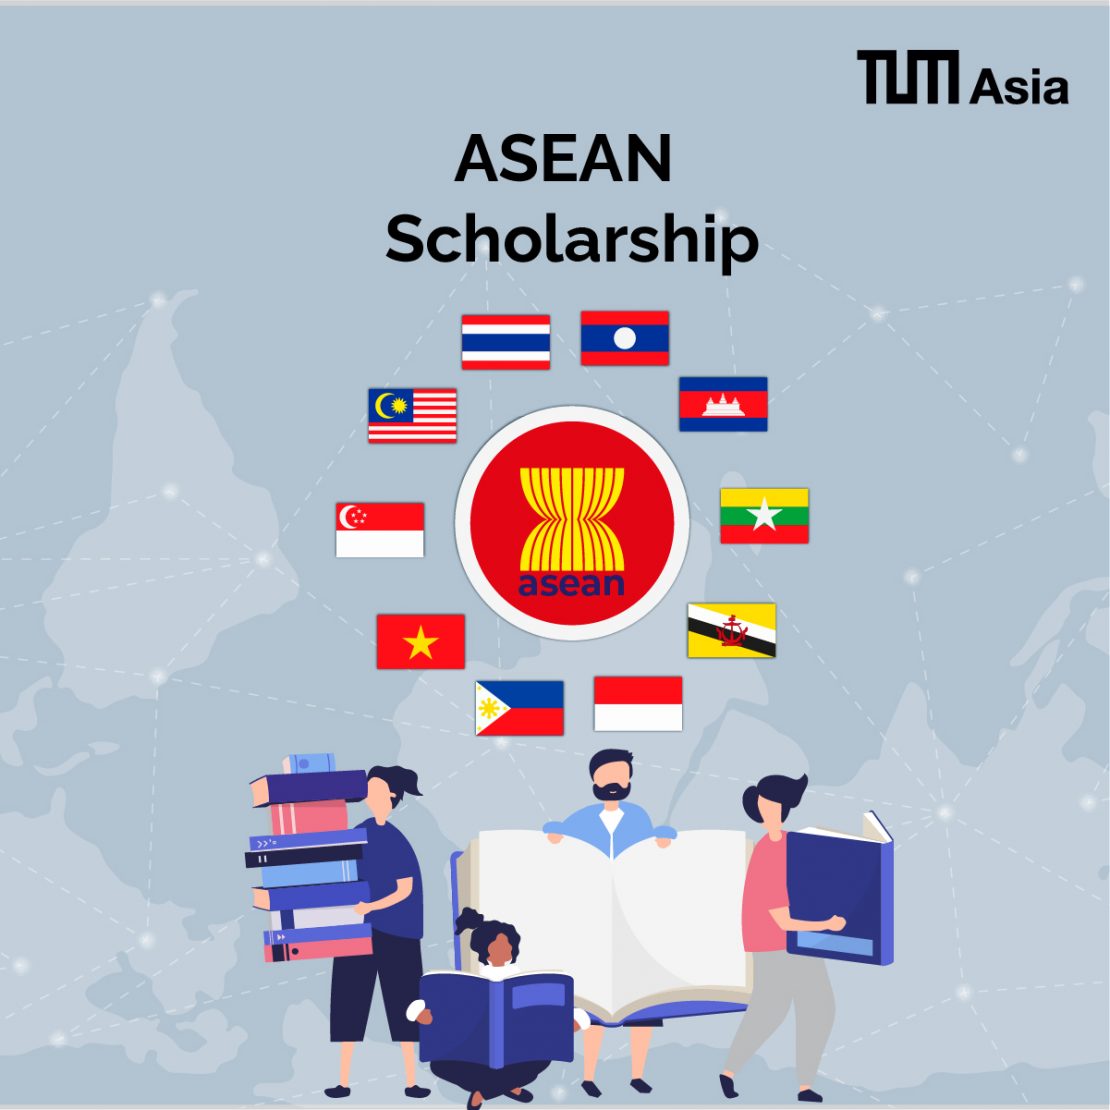 engineering-talents-of-tumorrow-tum-asia-postgraduate-scholarships-tum-asia